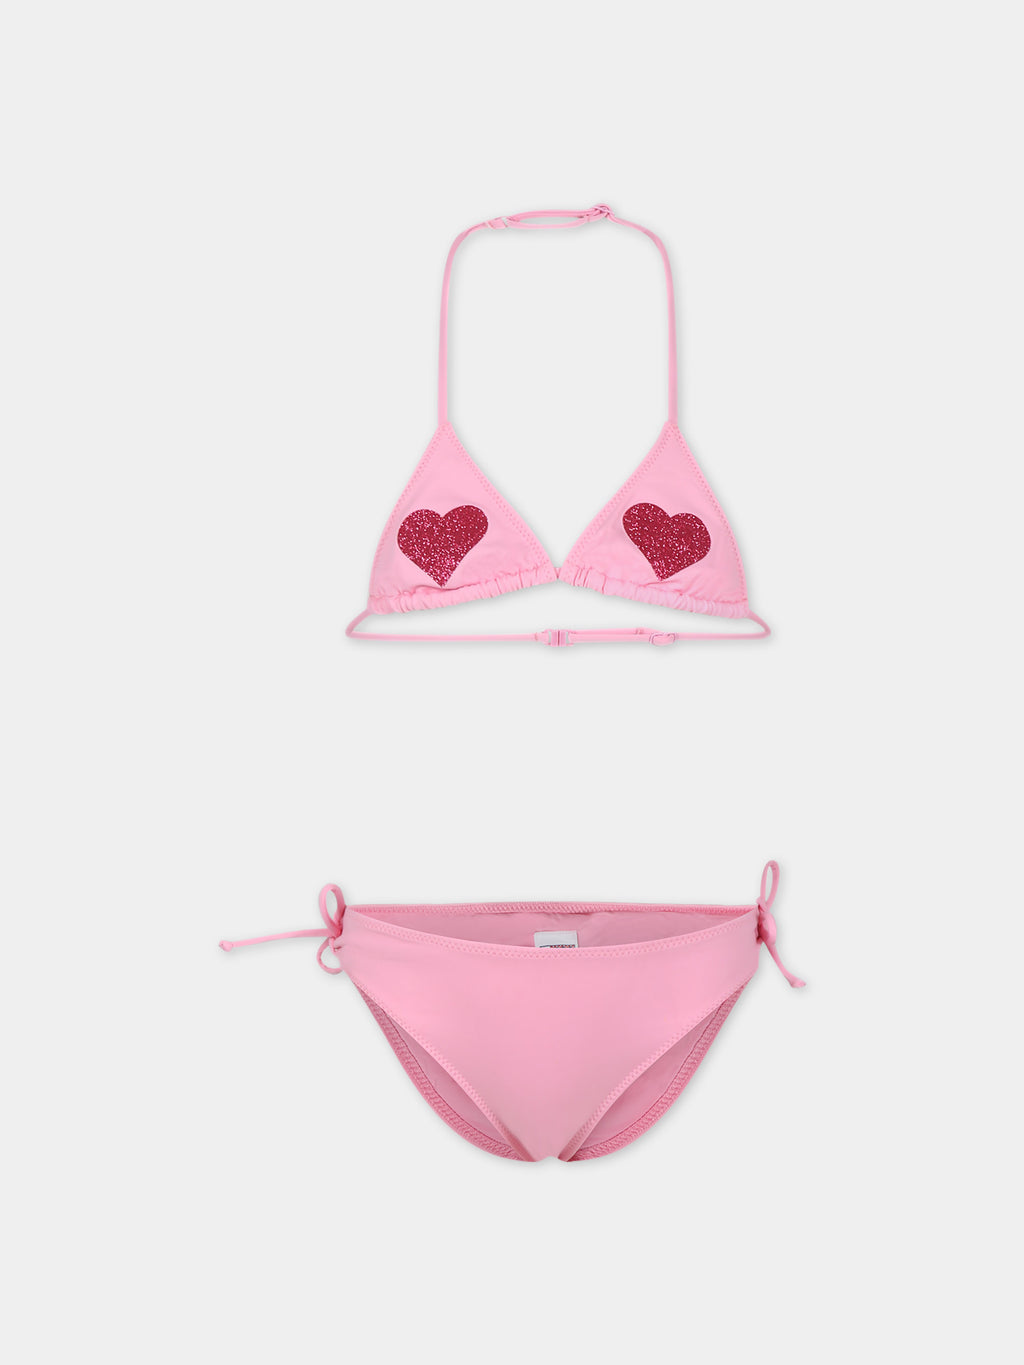 Pink bikini for girl with hearts